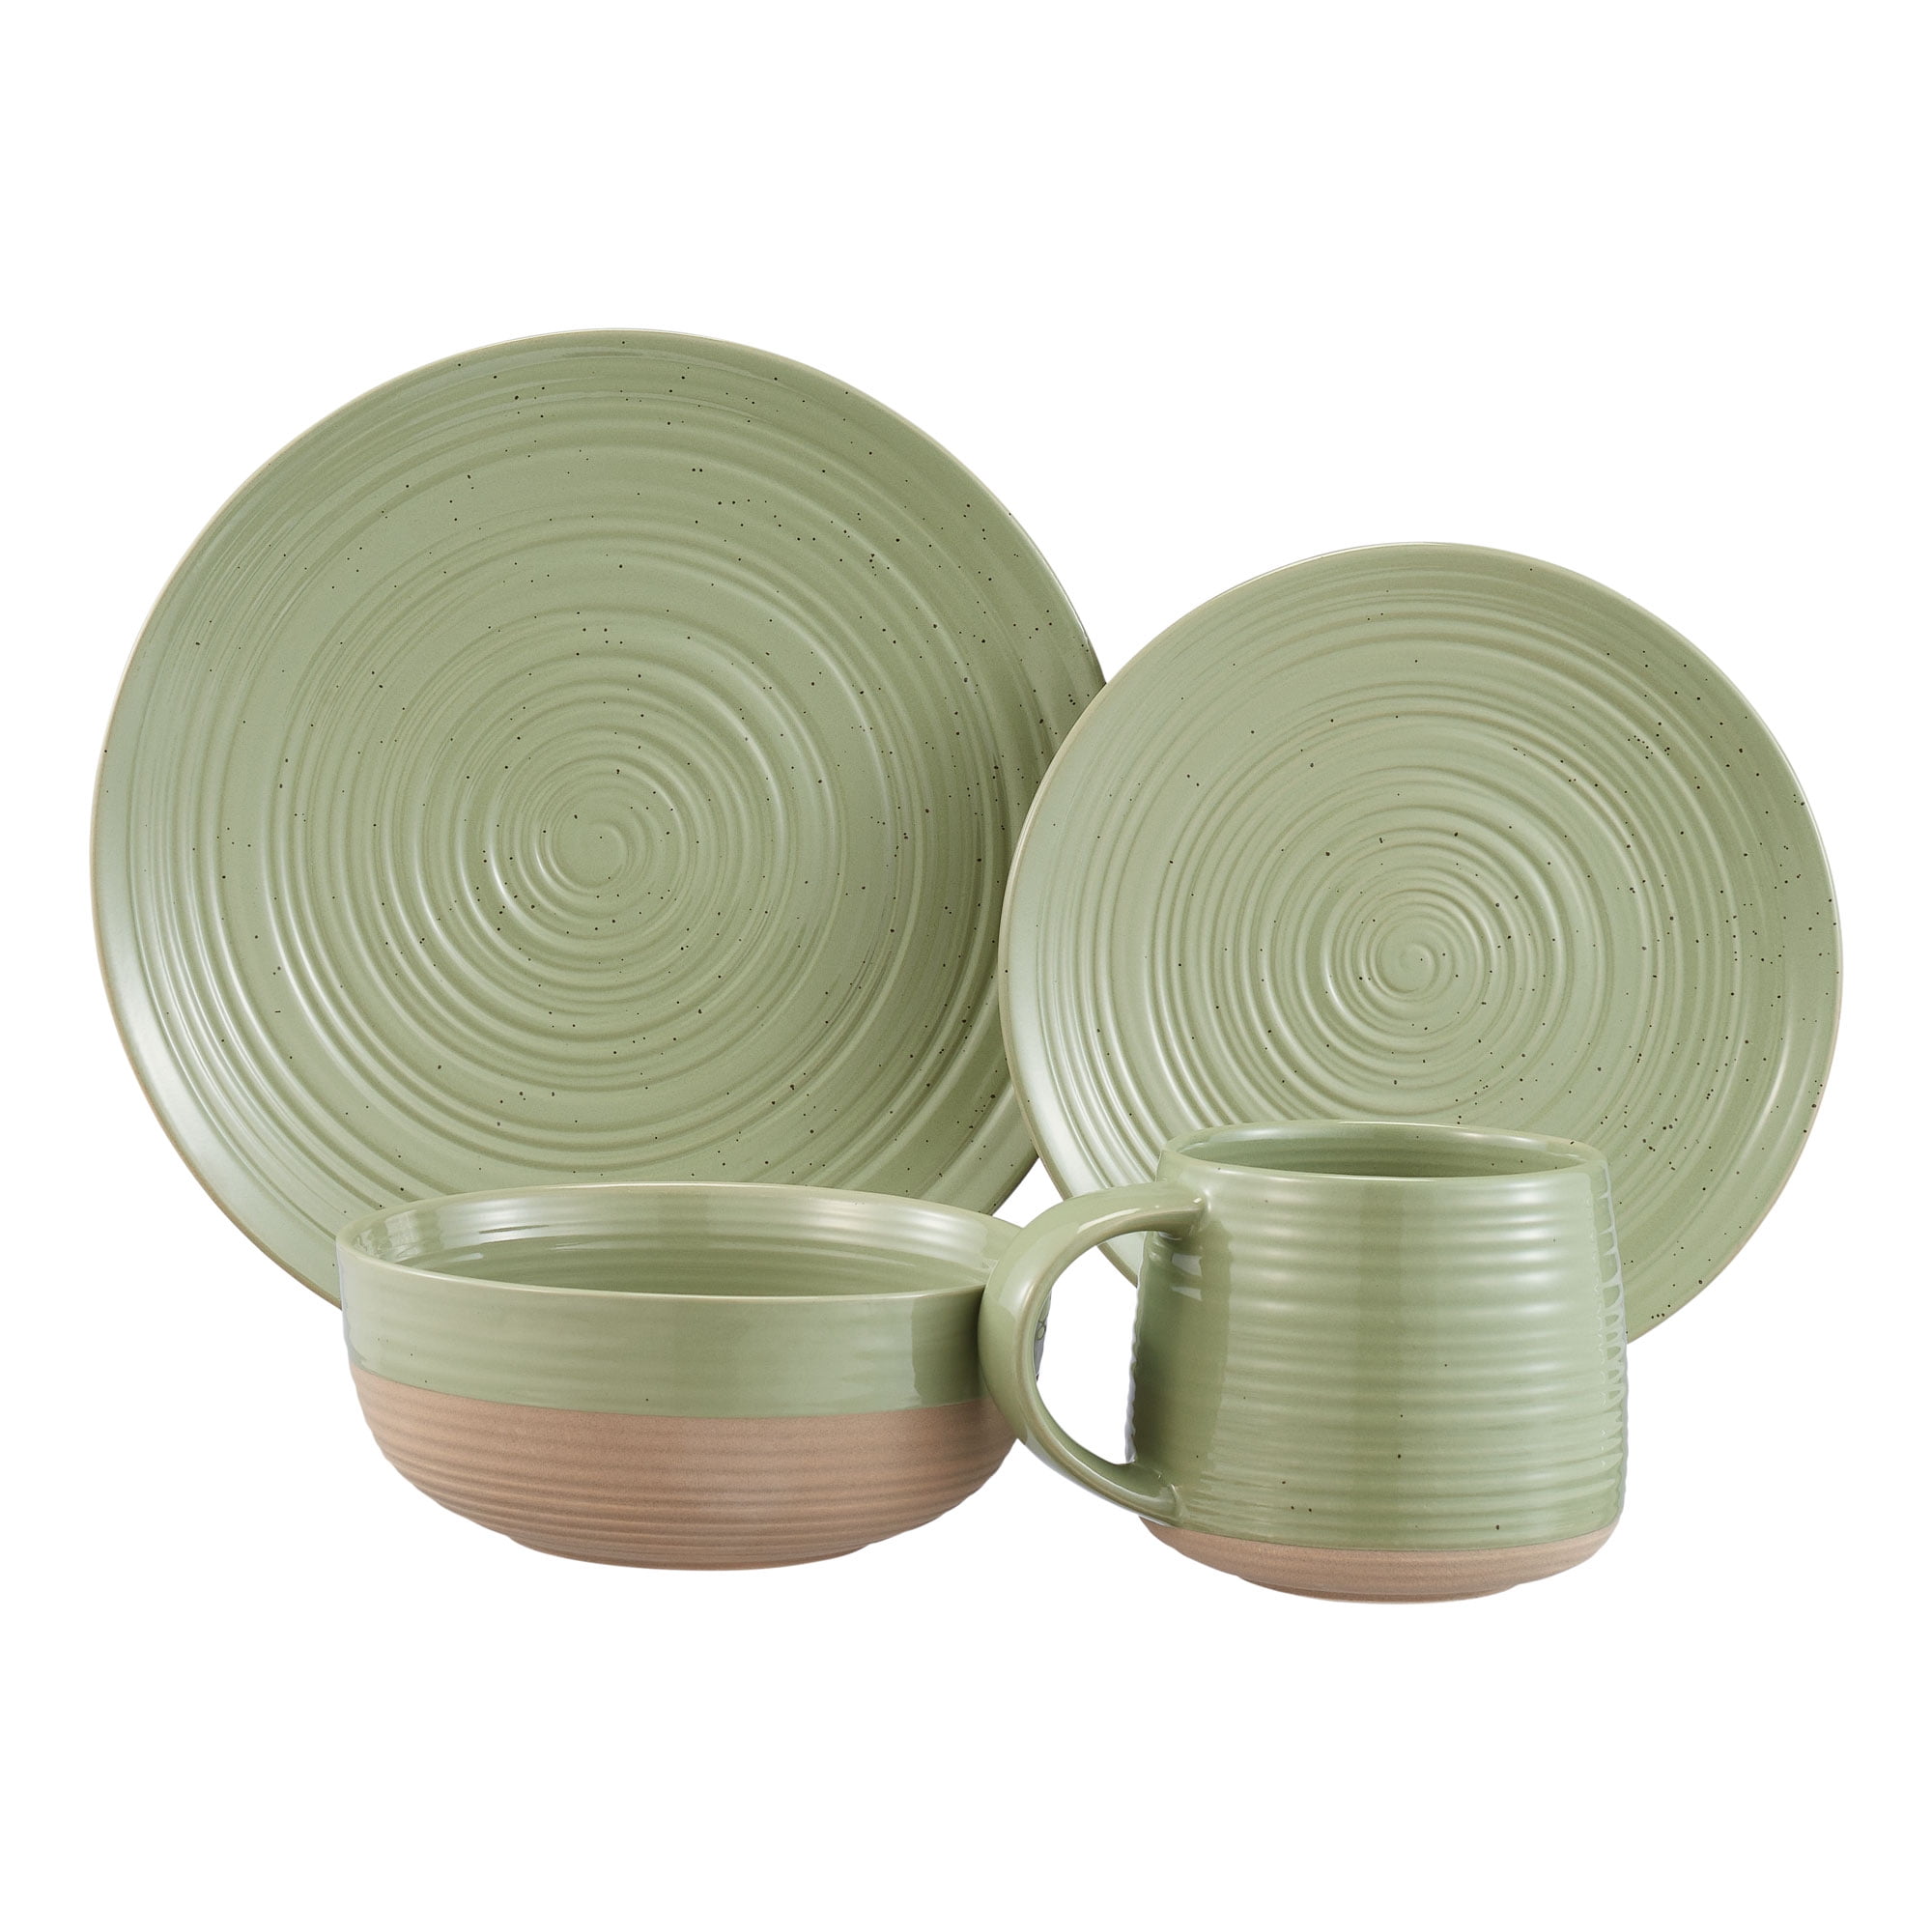 Better Homes & Gardens Artisanal Clay Stoneware 16-Piece Dining Set, Sage Green